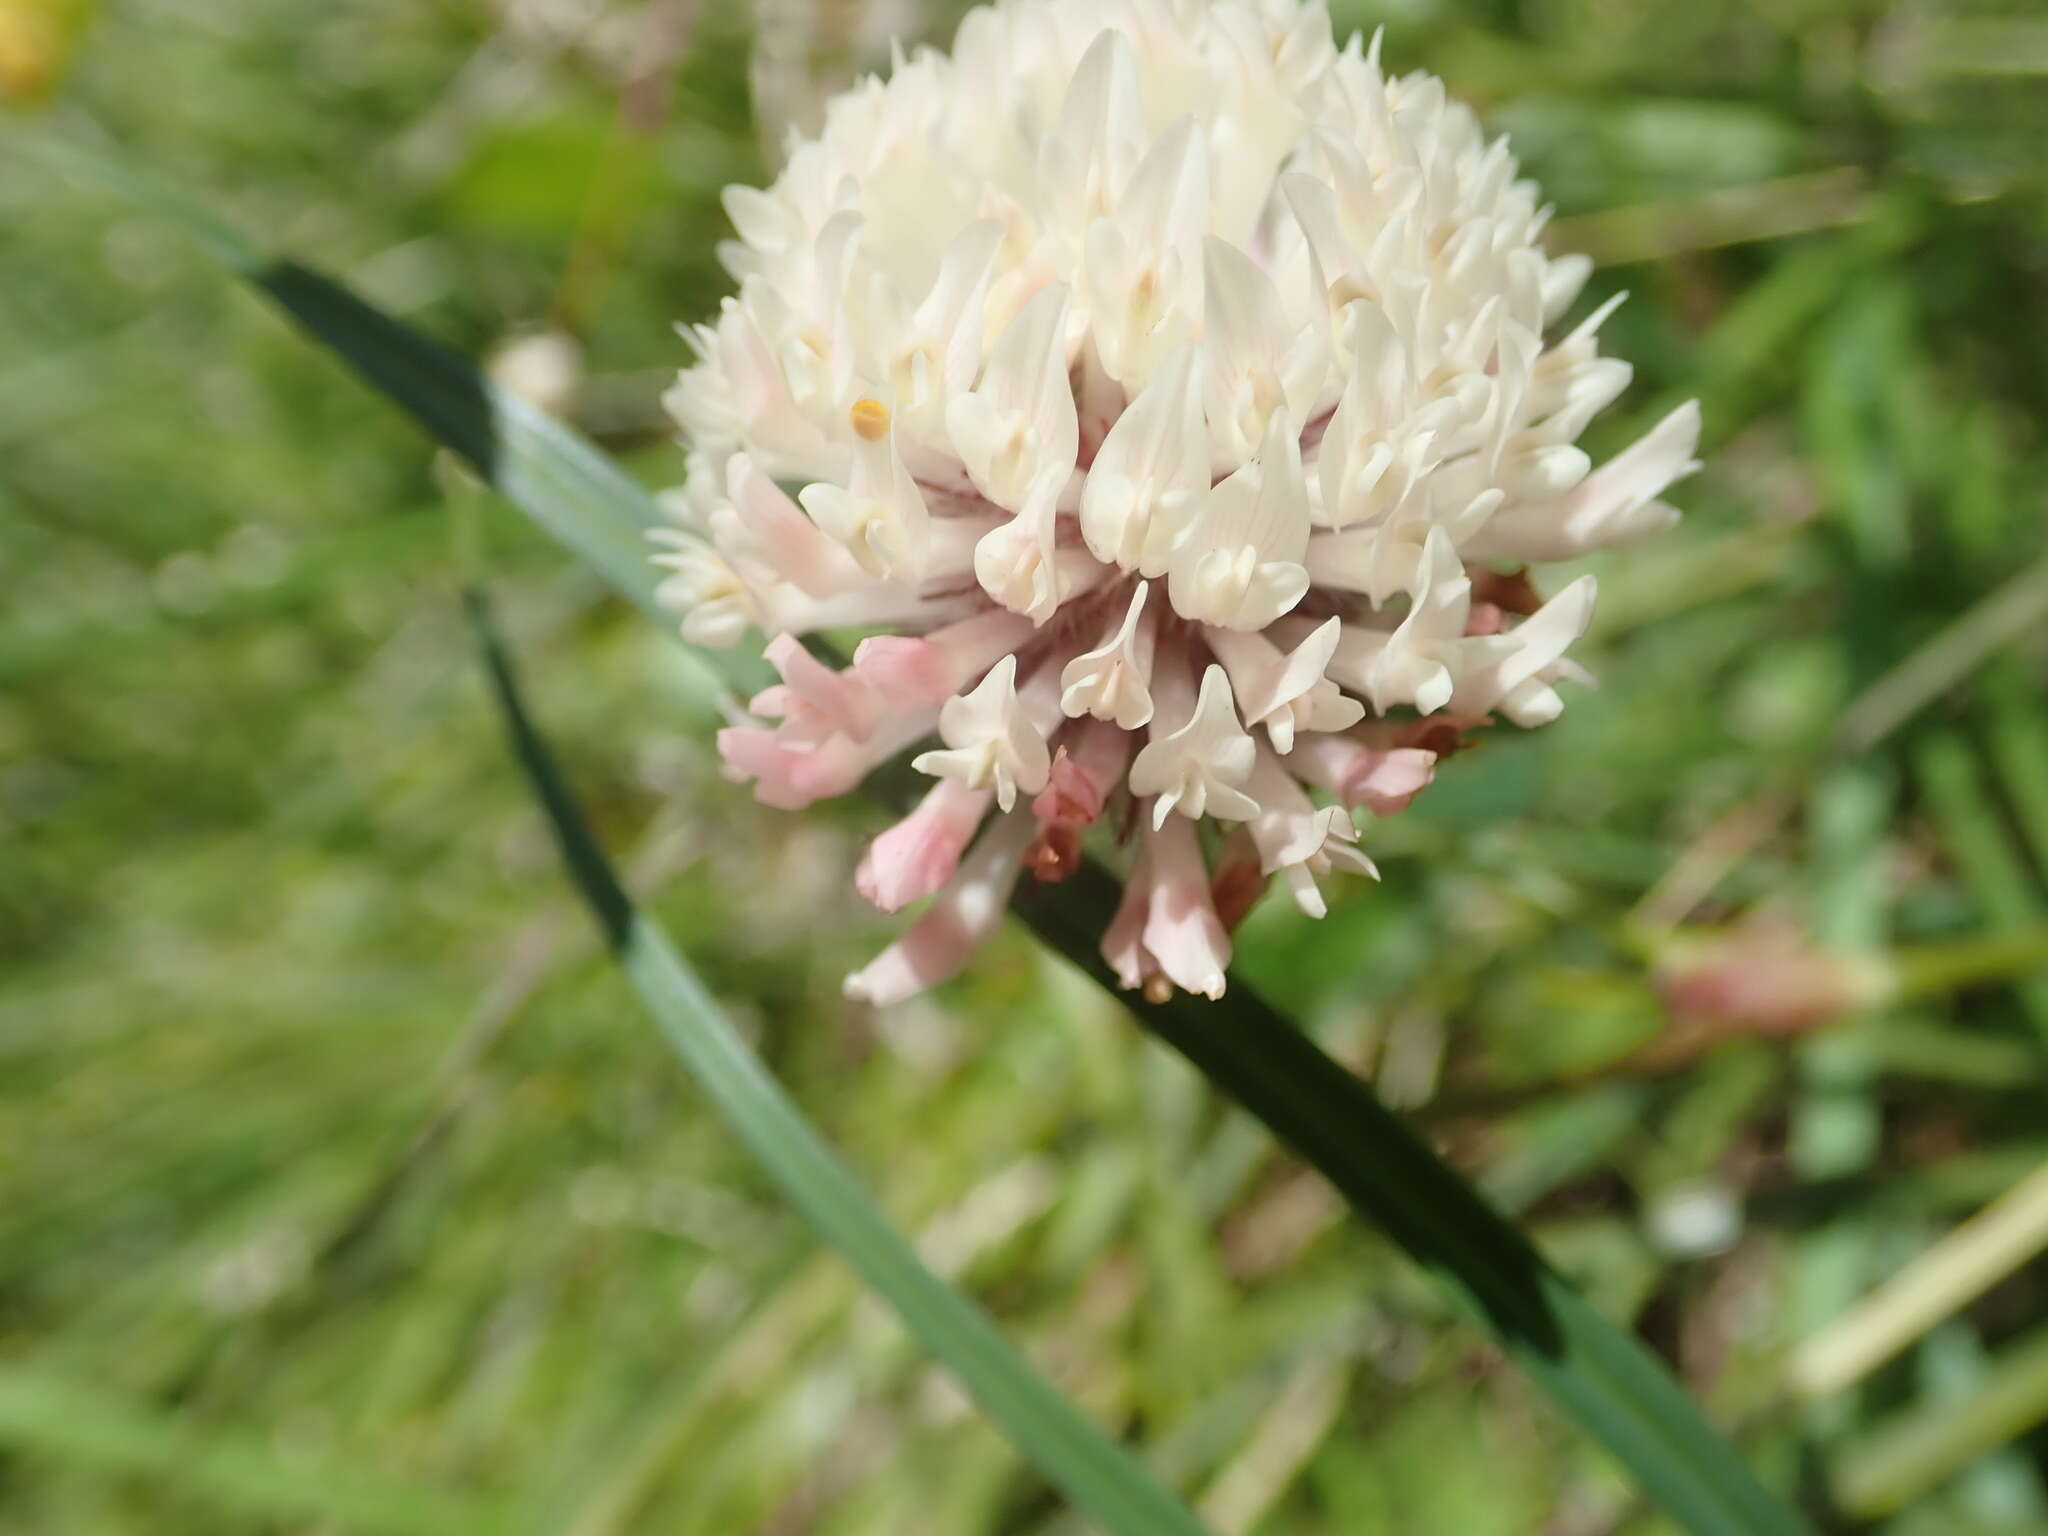 Image of Trifolium pratense var. frigidum Gaudin